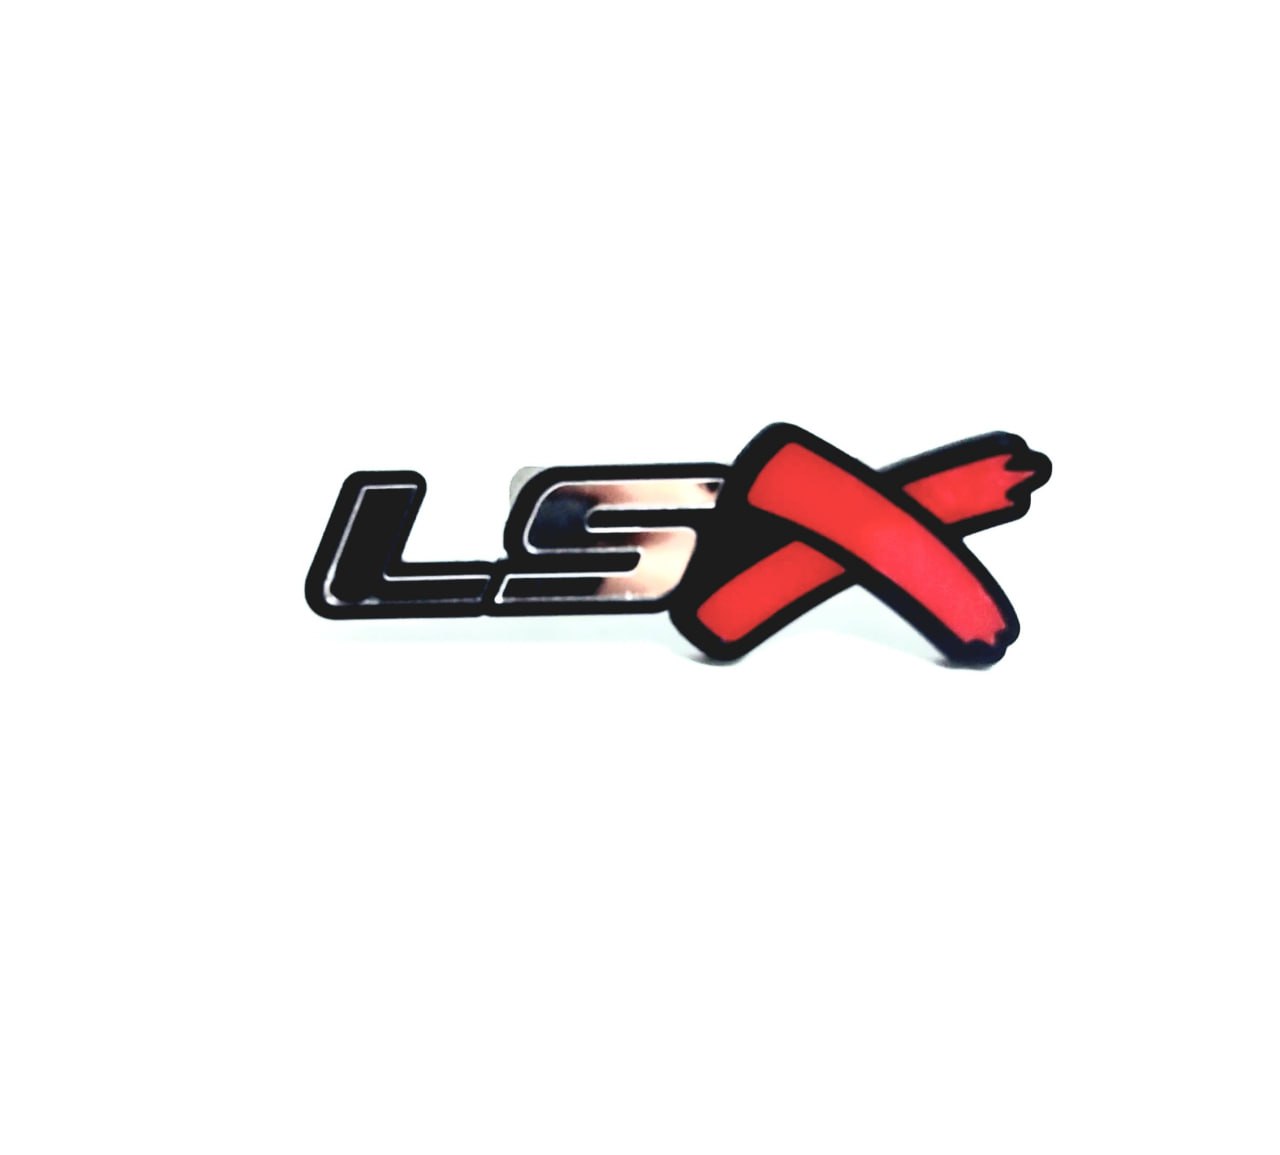 Chevrolet Radiator grille emblem with LSX logo